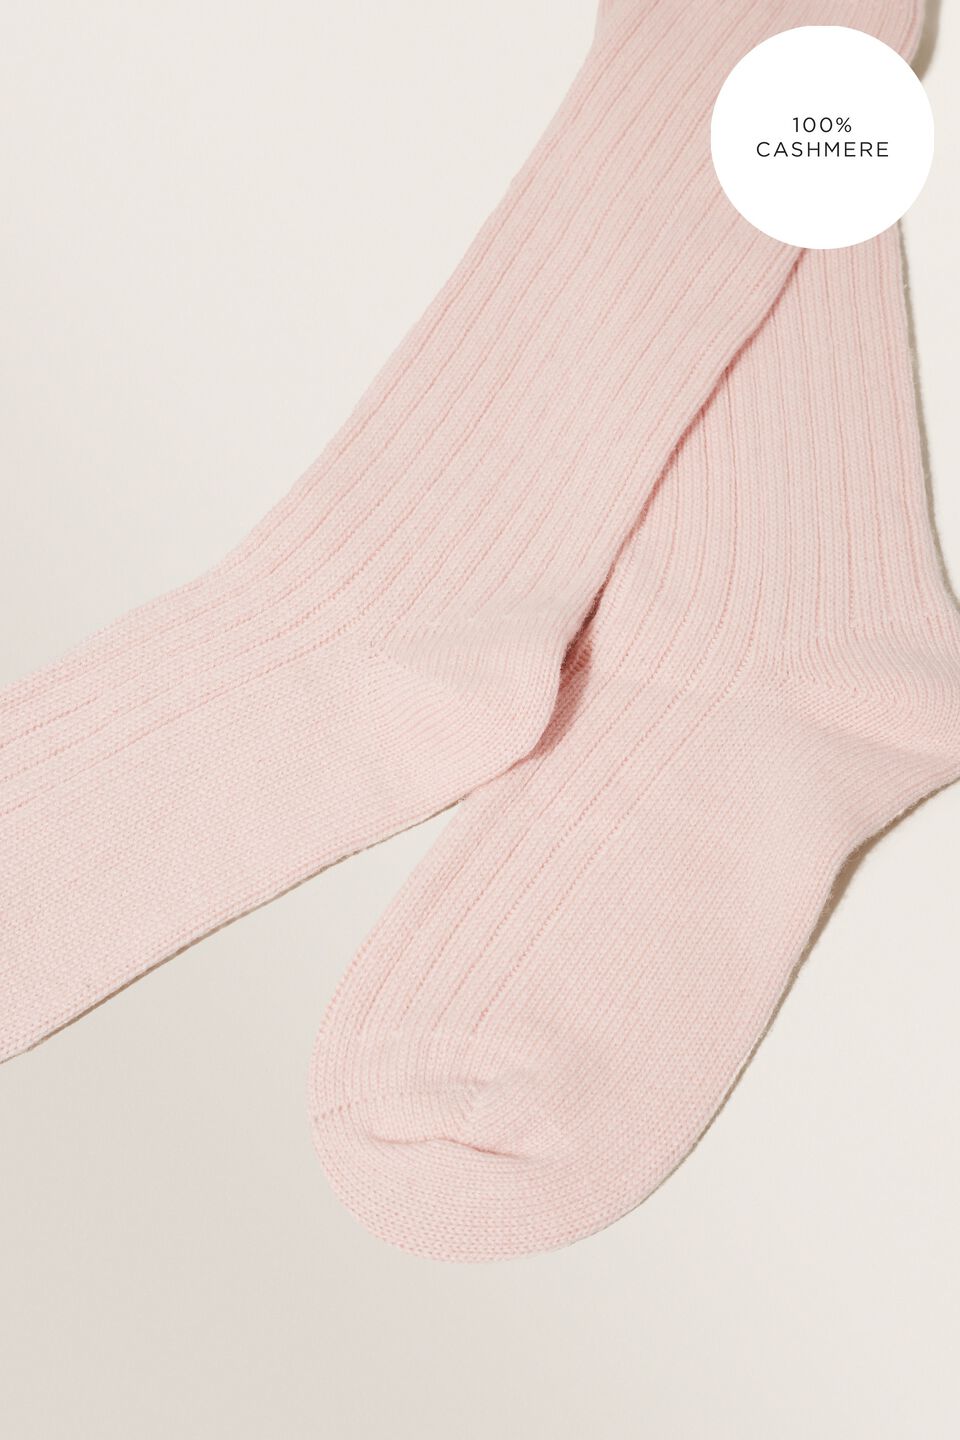 Cashmere Lounge Socks  Ash Pink